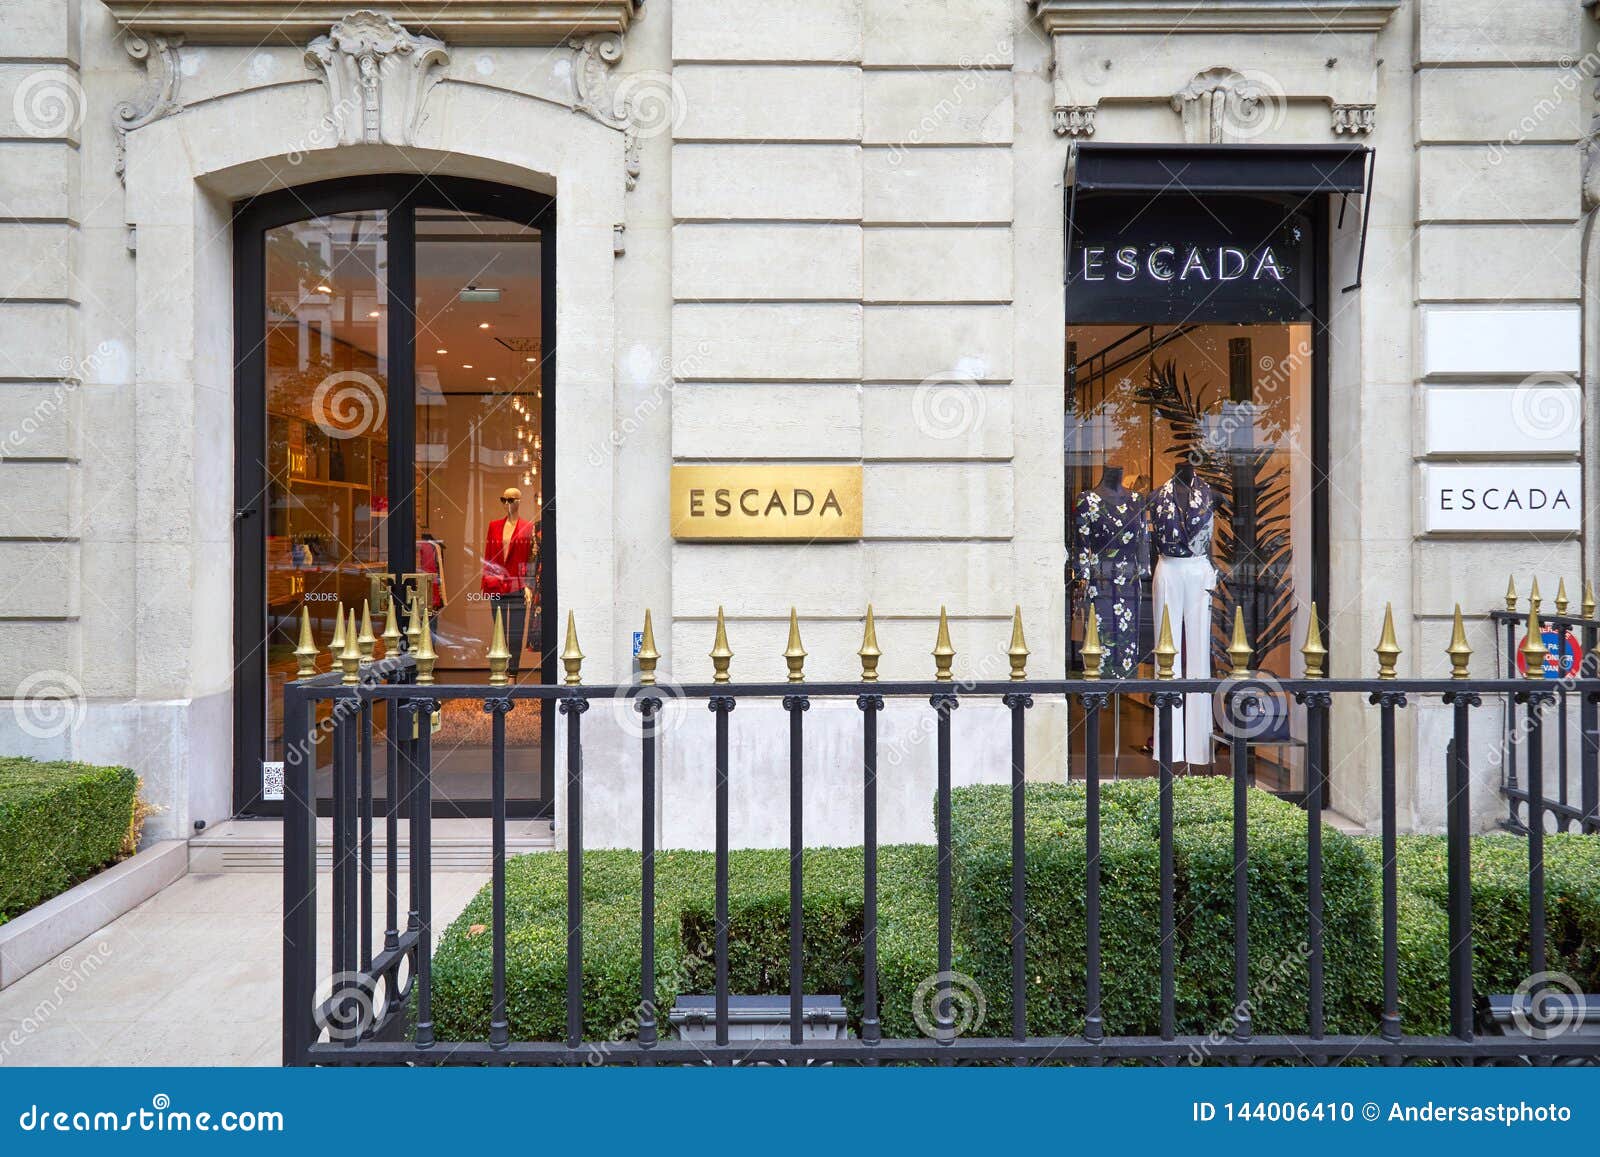 Fendi Fashion Luxury Store in Avenue Montaigne in Paris, France